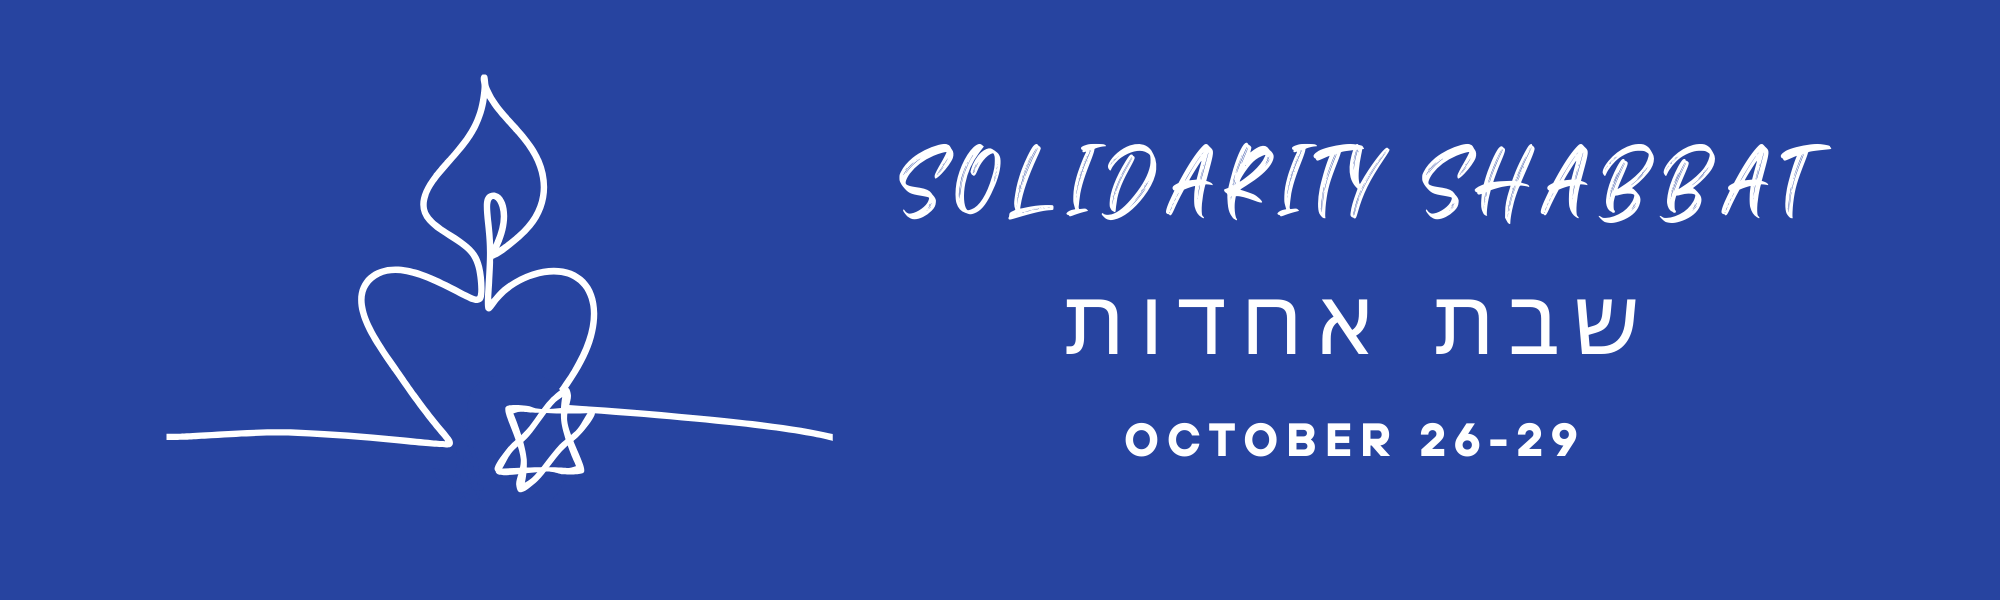 Solidarity Shabbat Banner